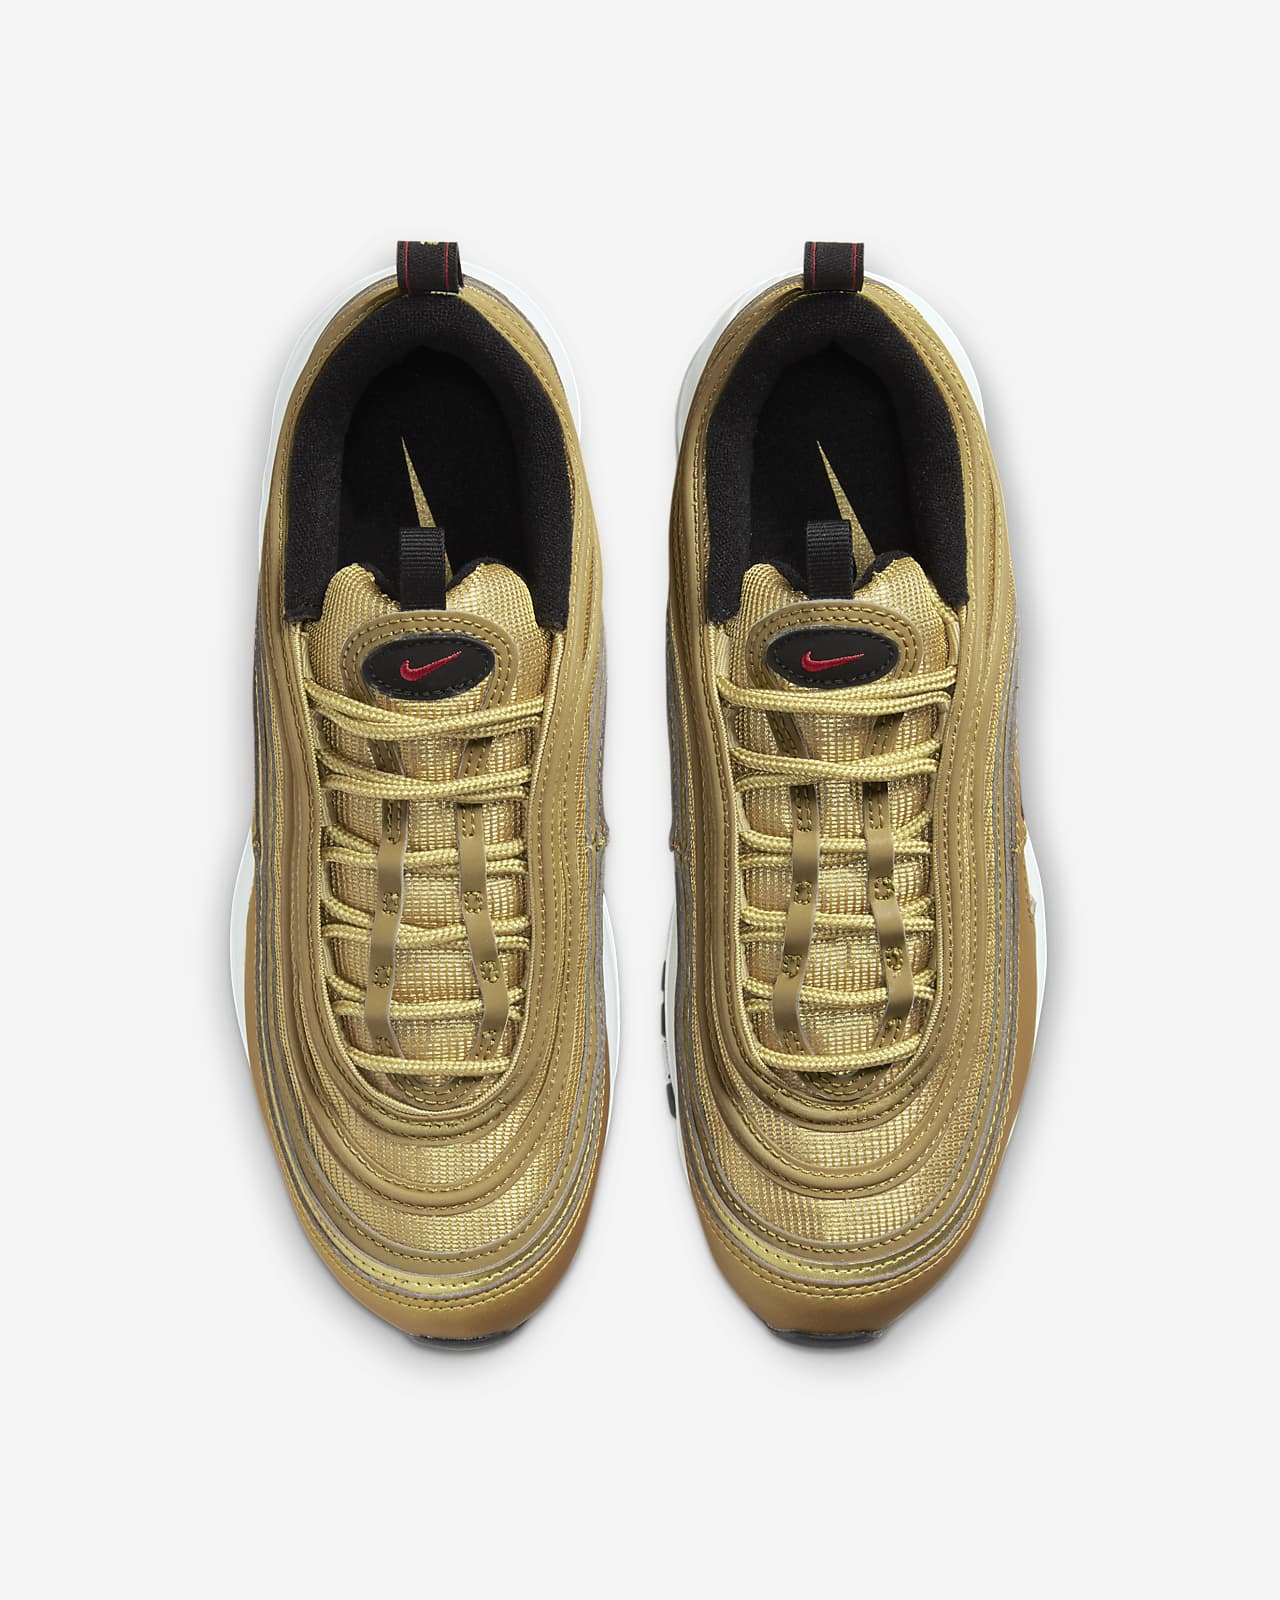 Gold Bullet' Nike Air Max 97 Returns This Week